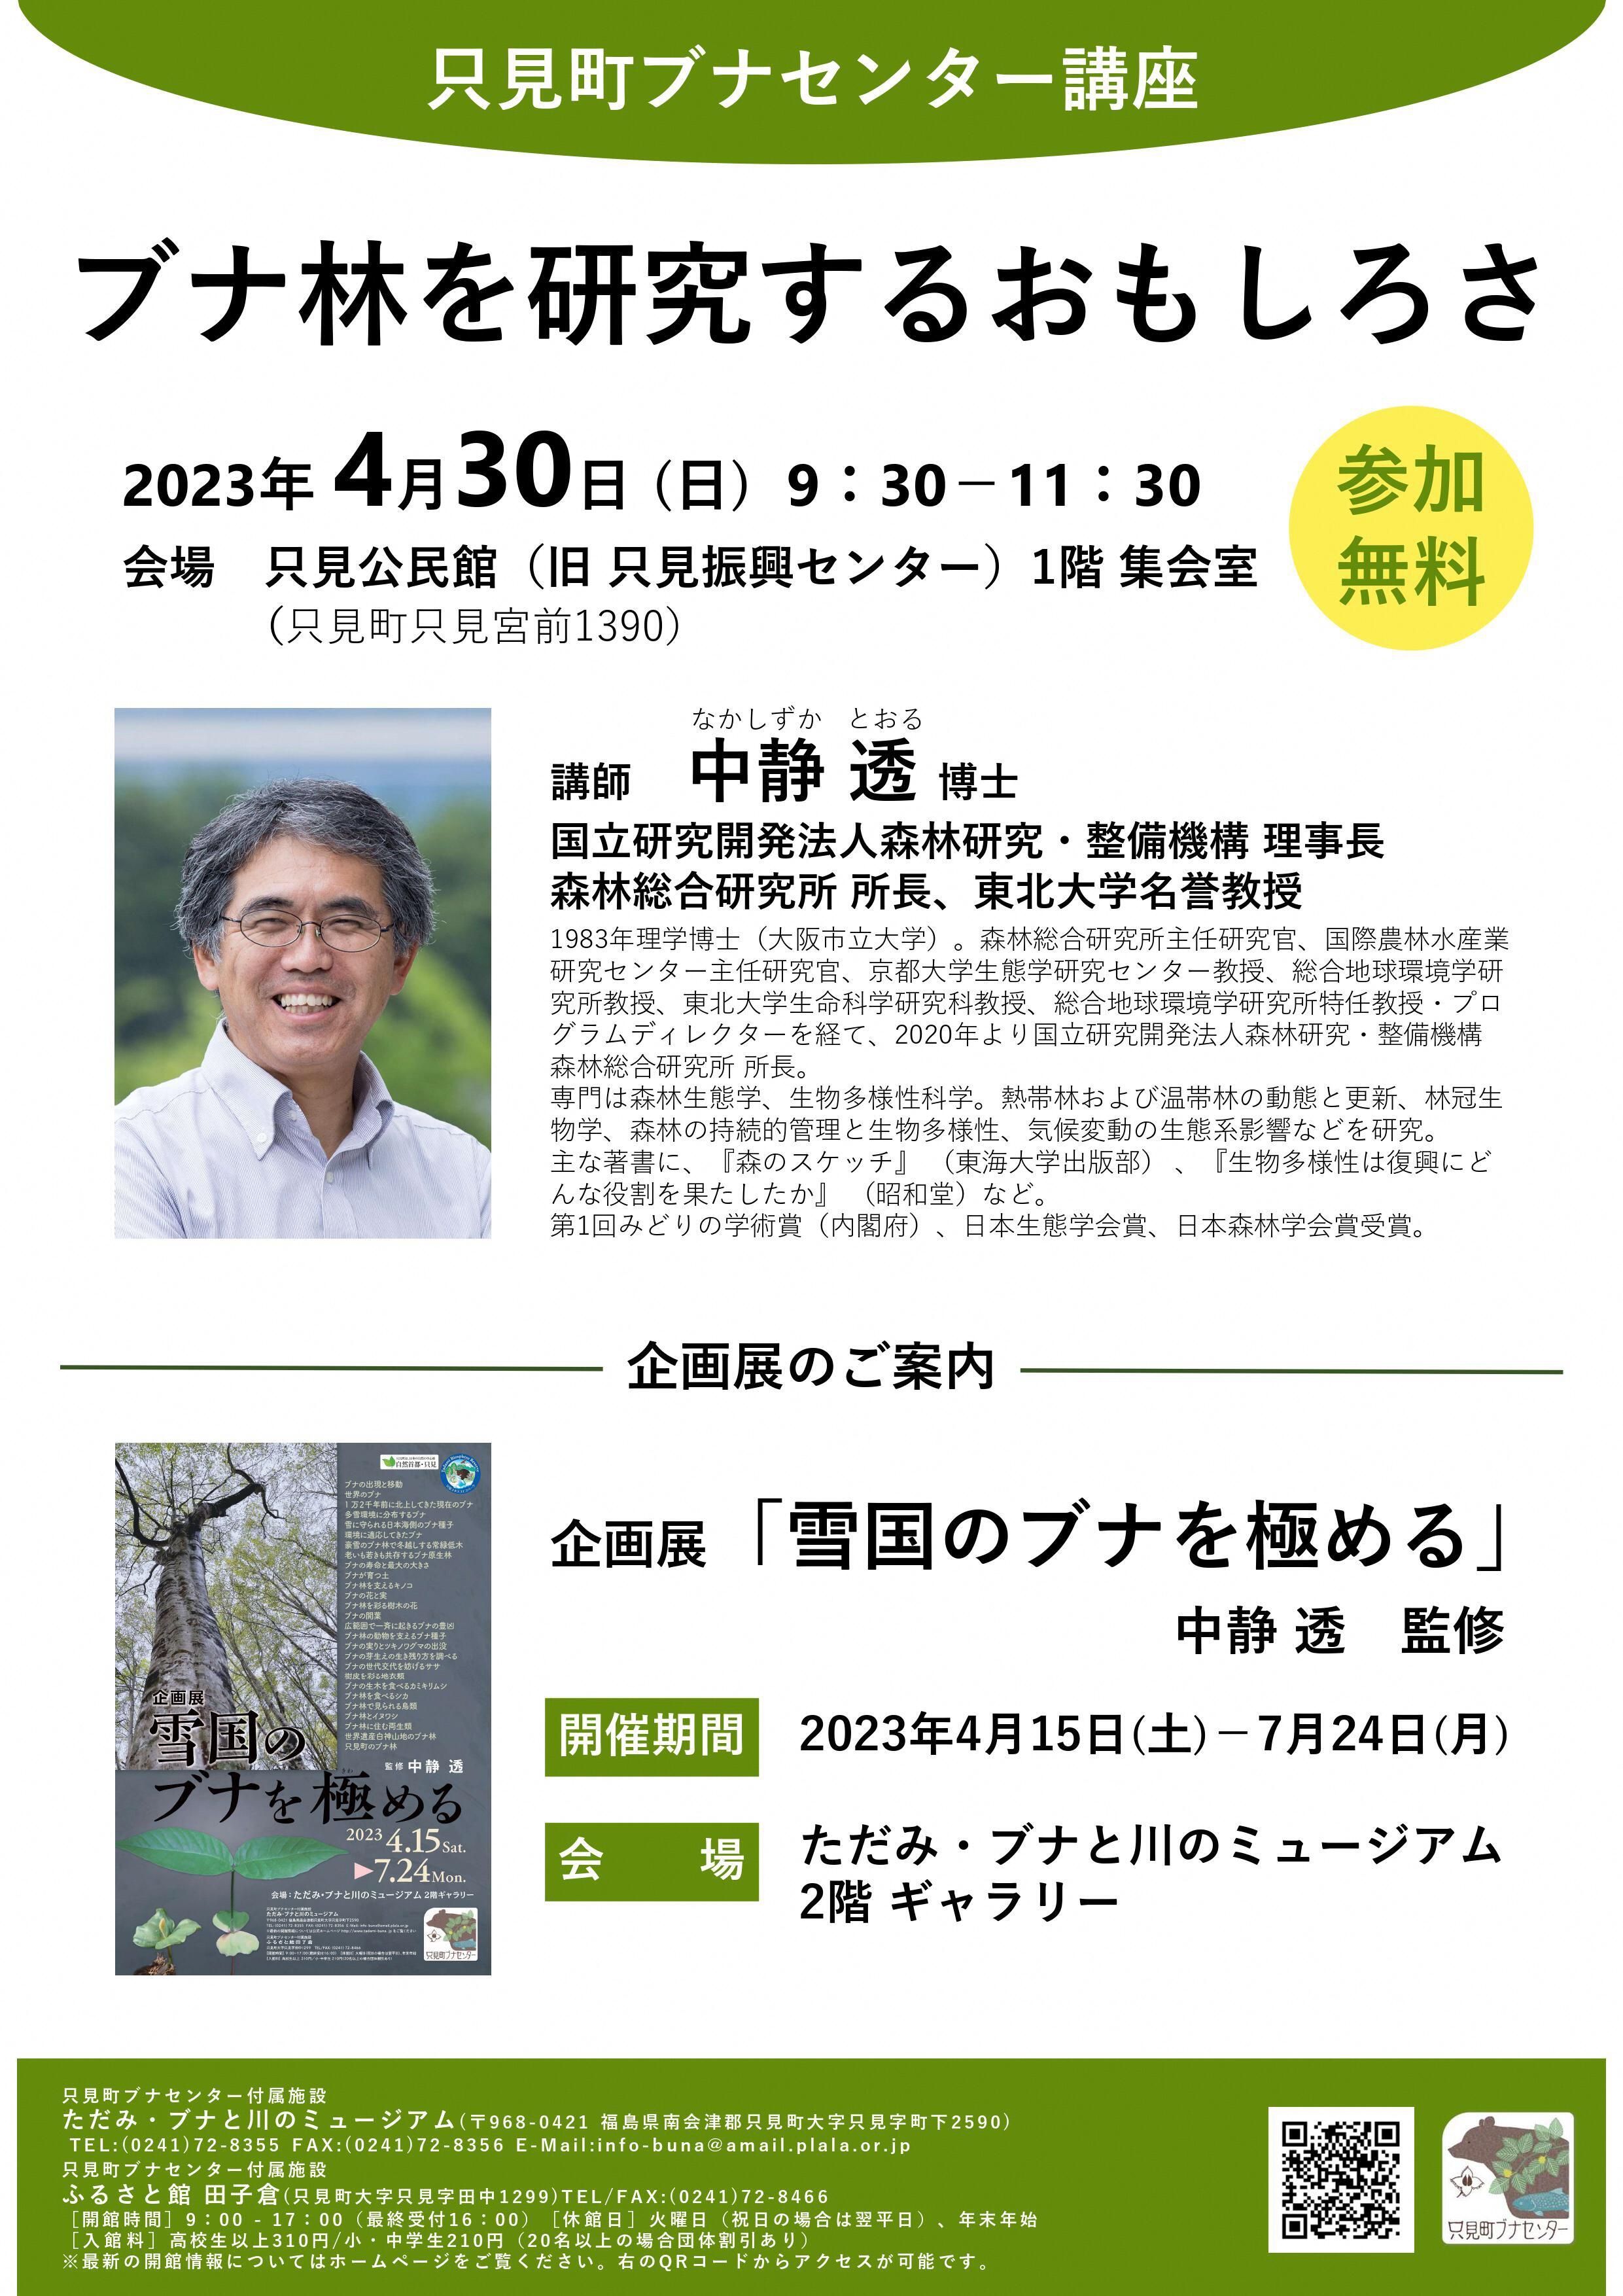 https://www.town.tadami.lg.jp/event/2023/04/27/20230430_flyer.jpg